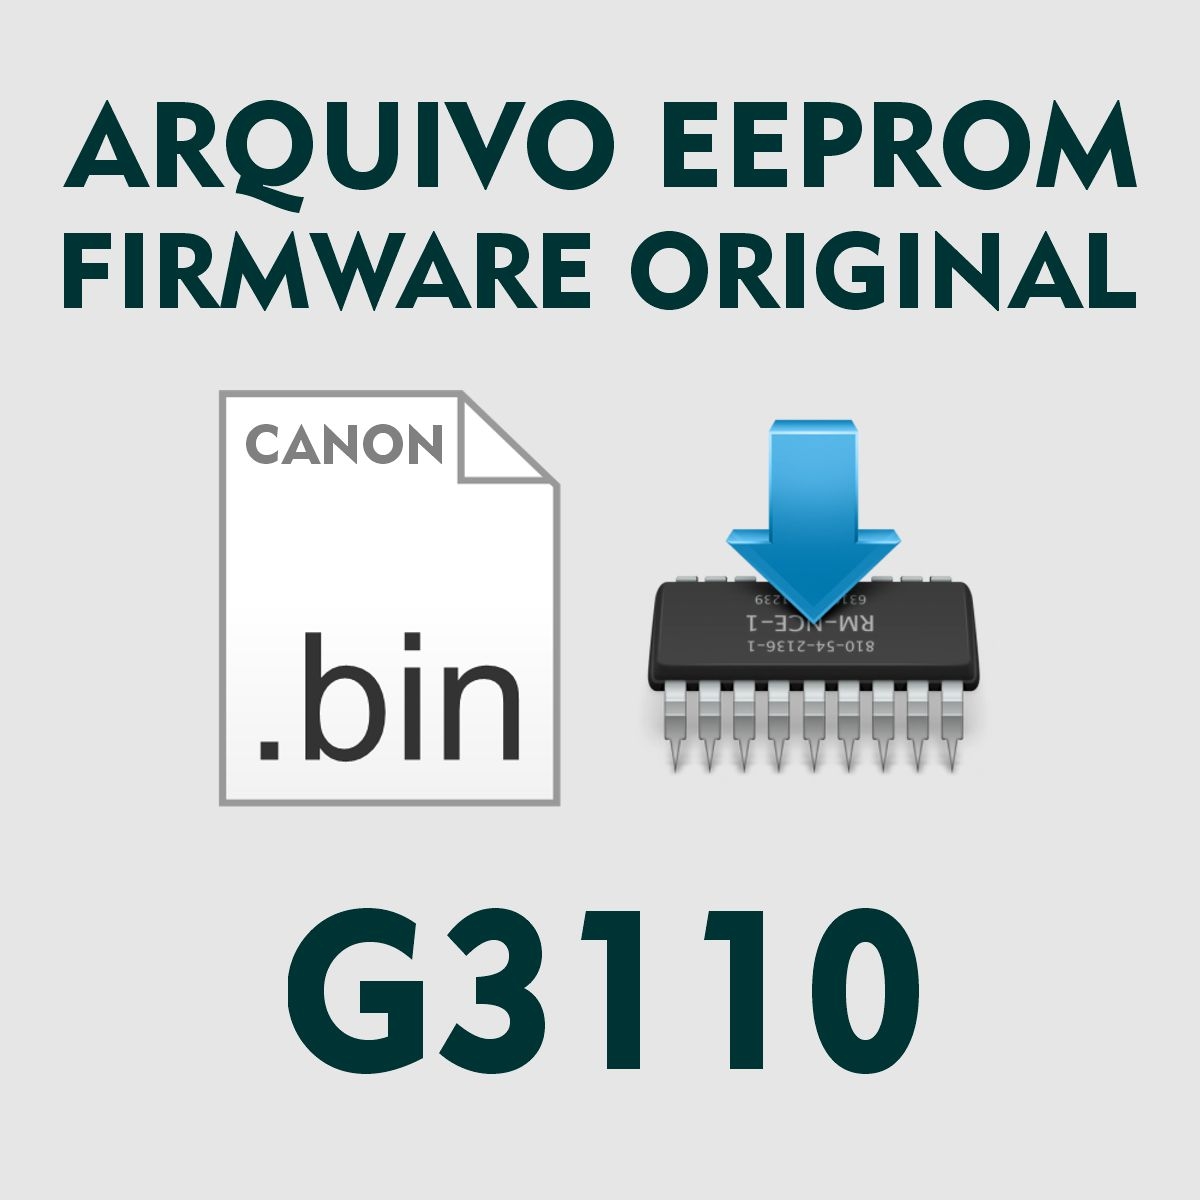 Canon G3110 | Arquivo de Eeprom Firmware .bin - Original